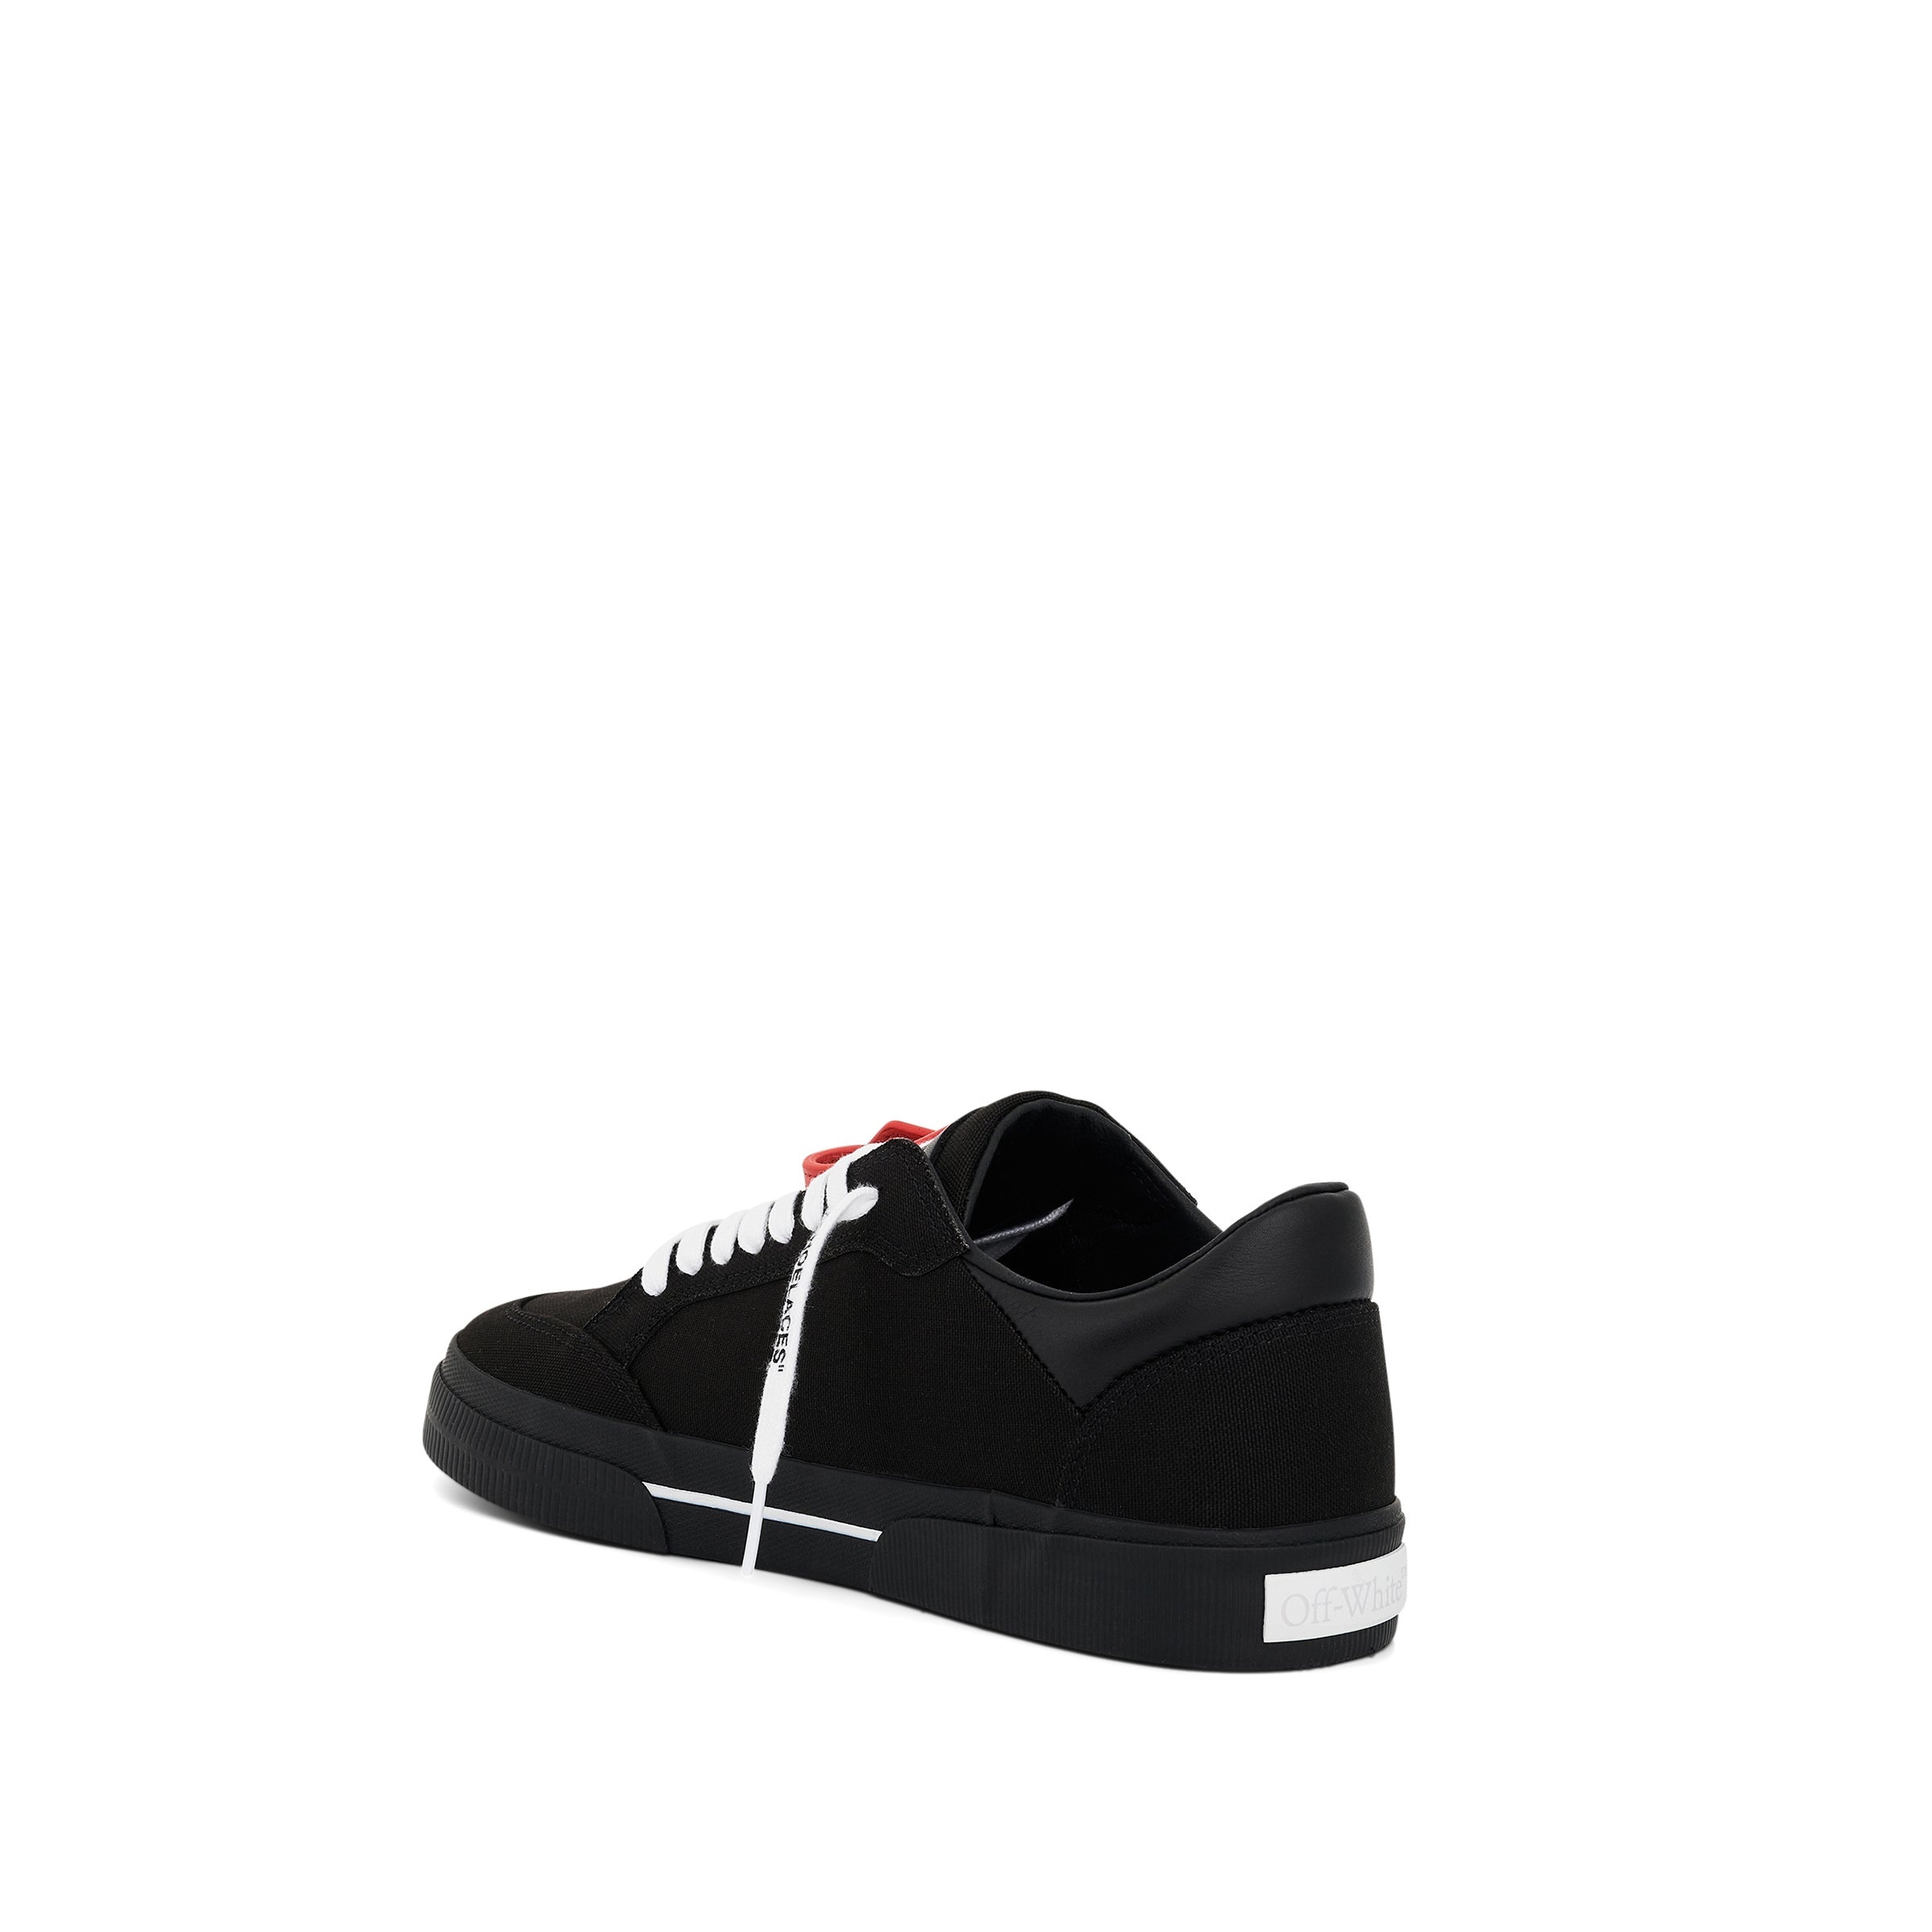 New Low Vulcanized Canvas Sneaker in Black/White - 3